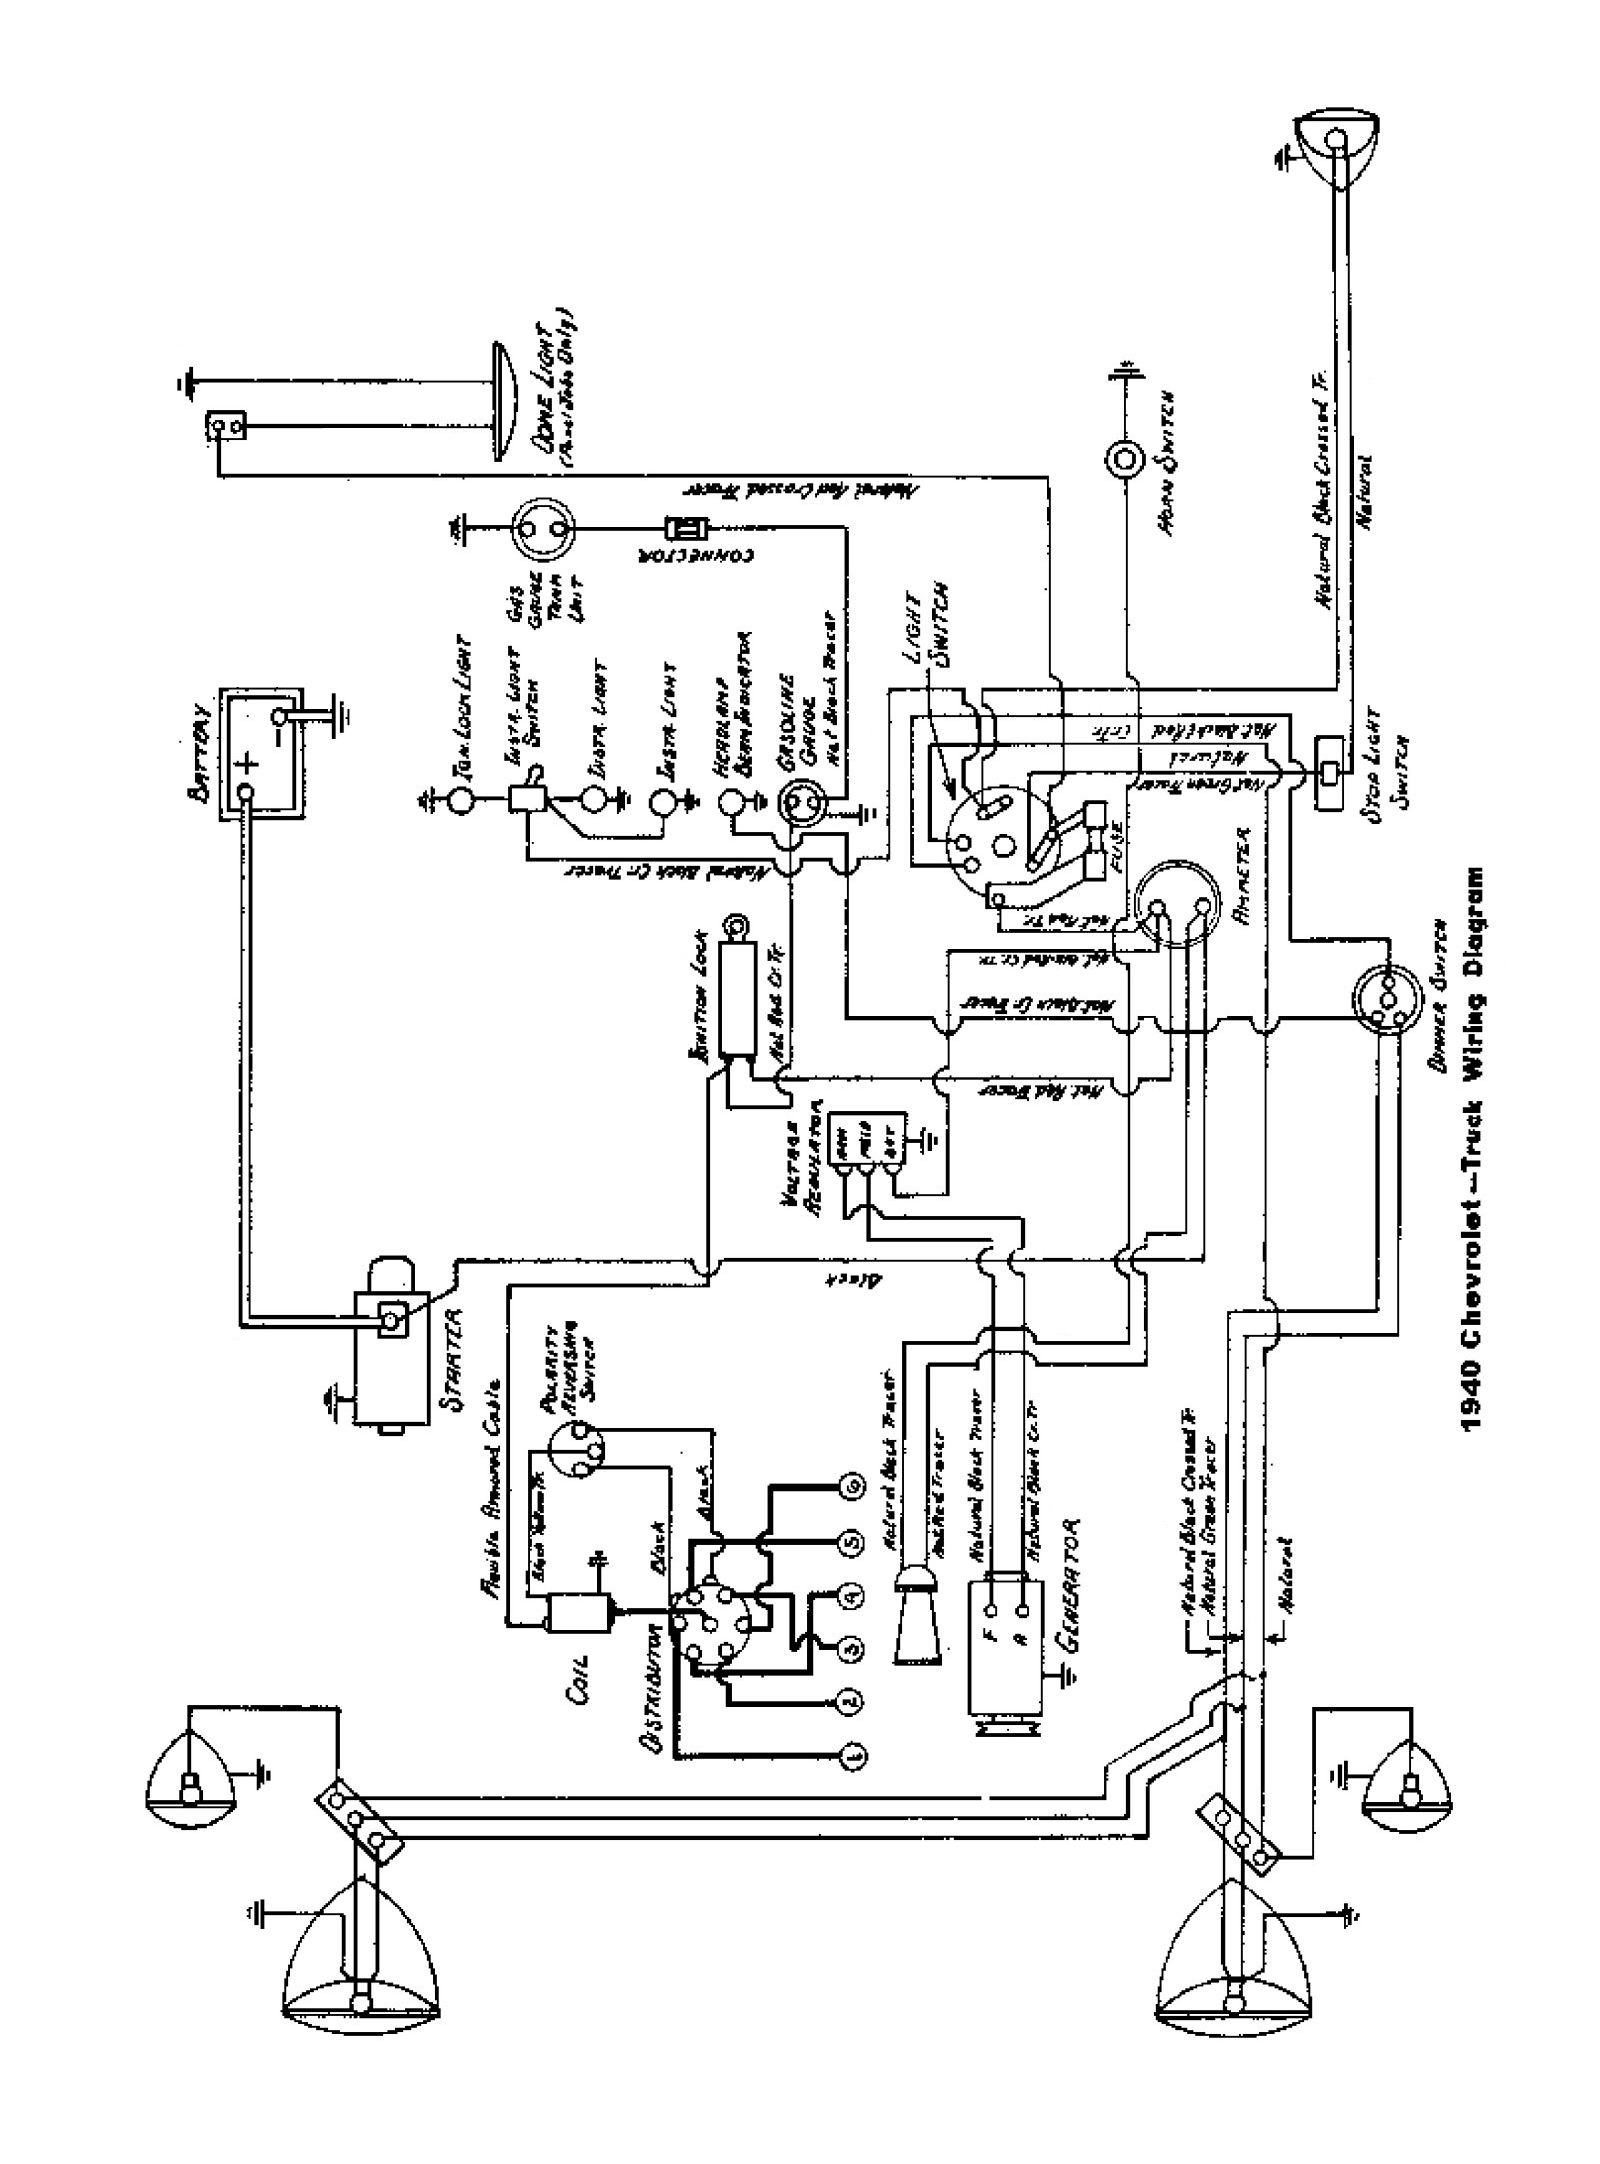 1956 Chevy Wiring | Wiring Diagram - 1979 Chevy Truck Wiring Diagram